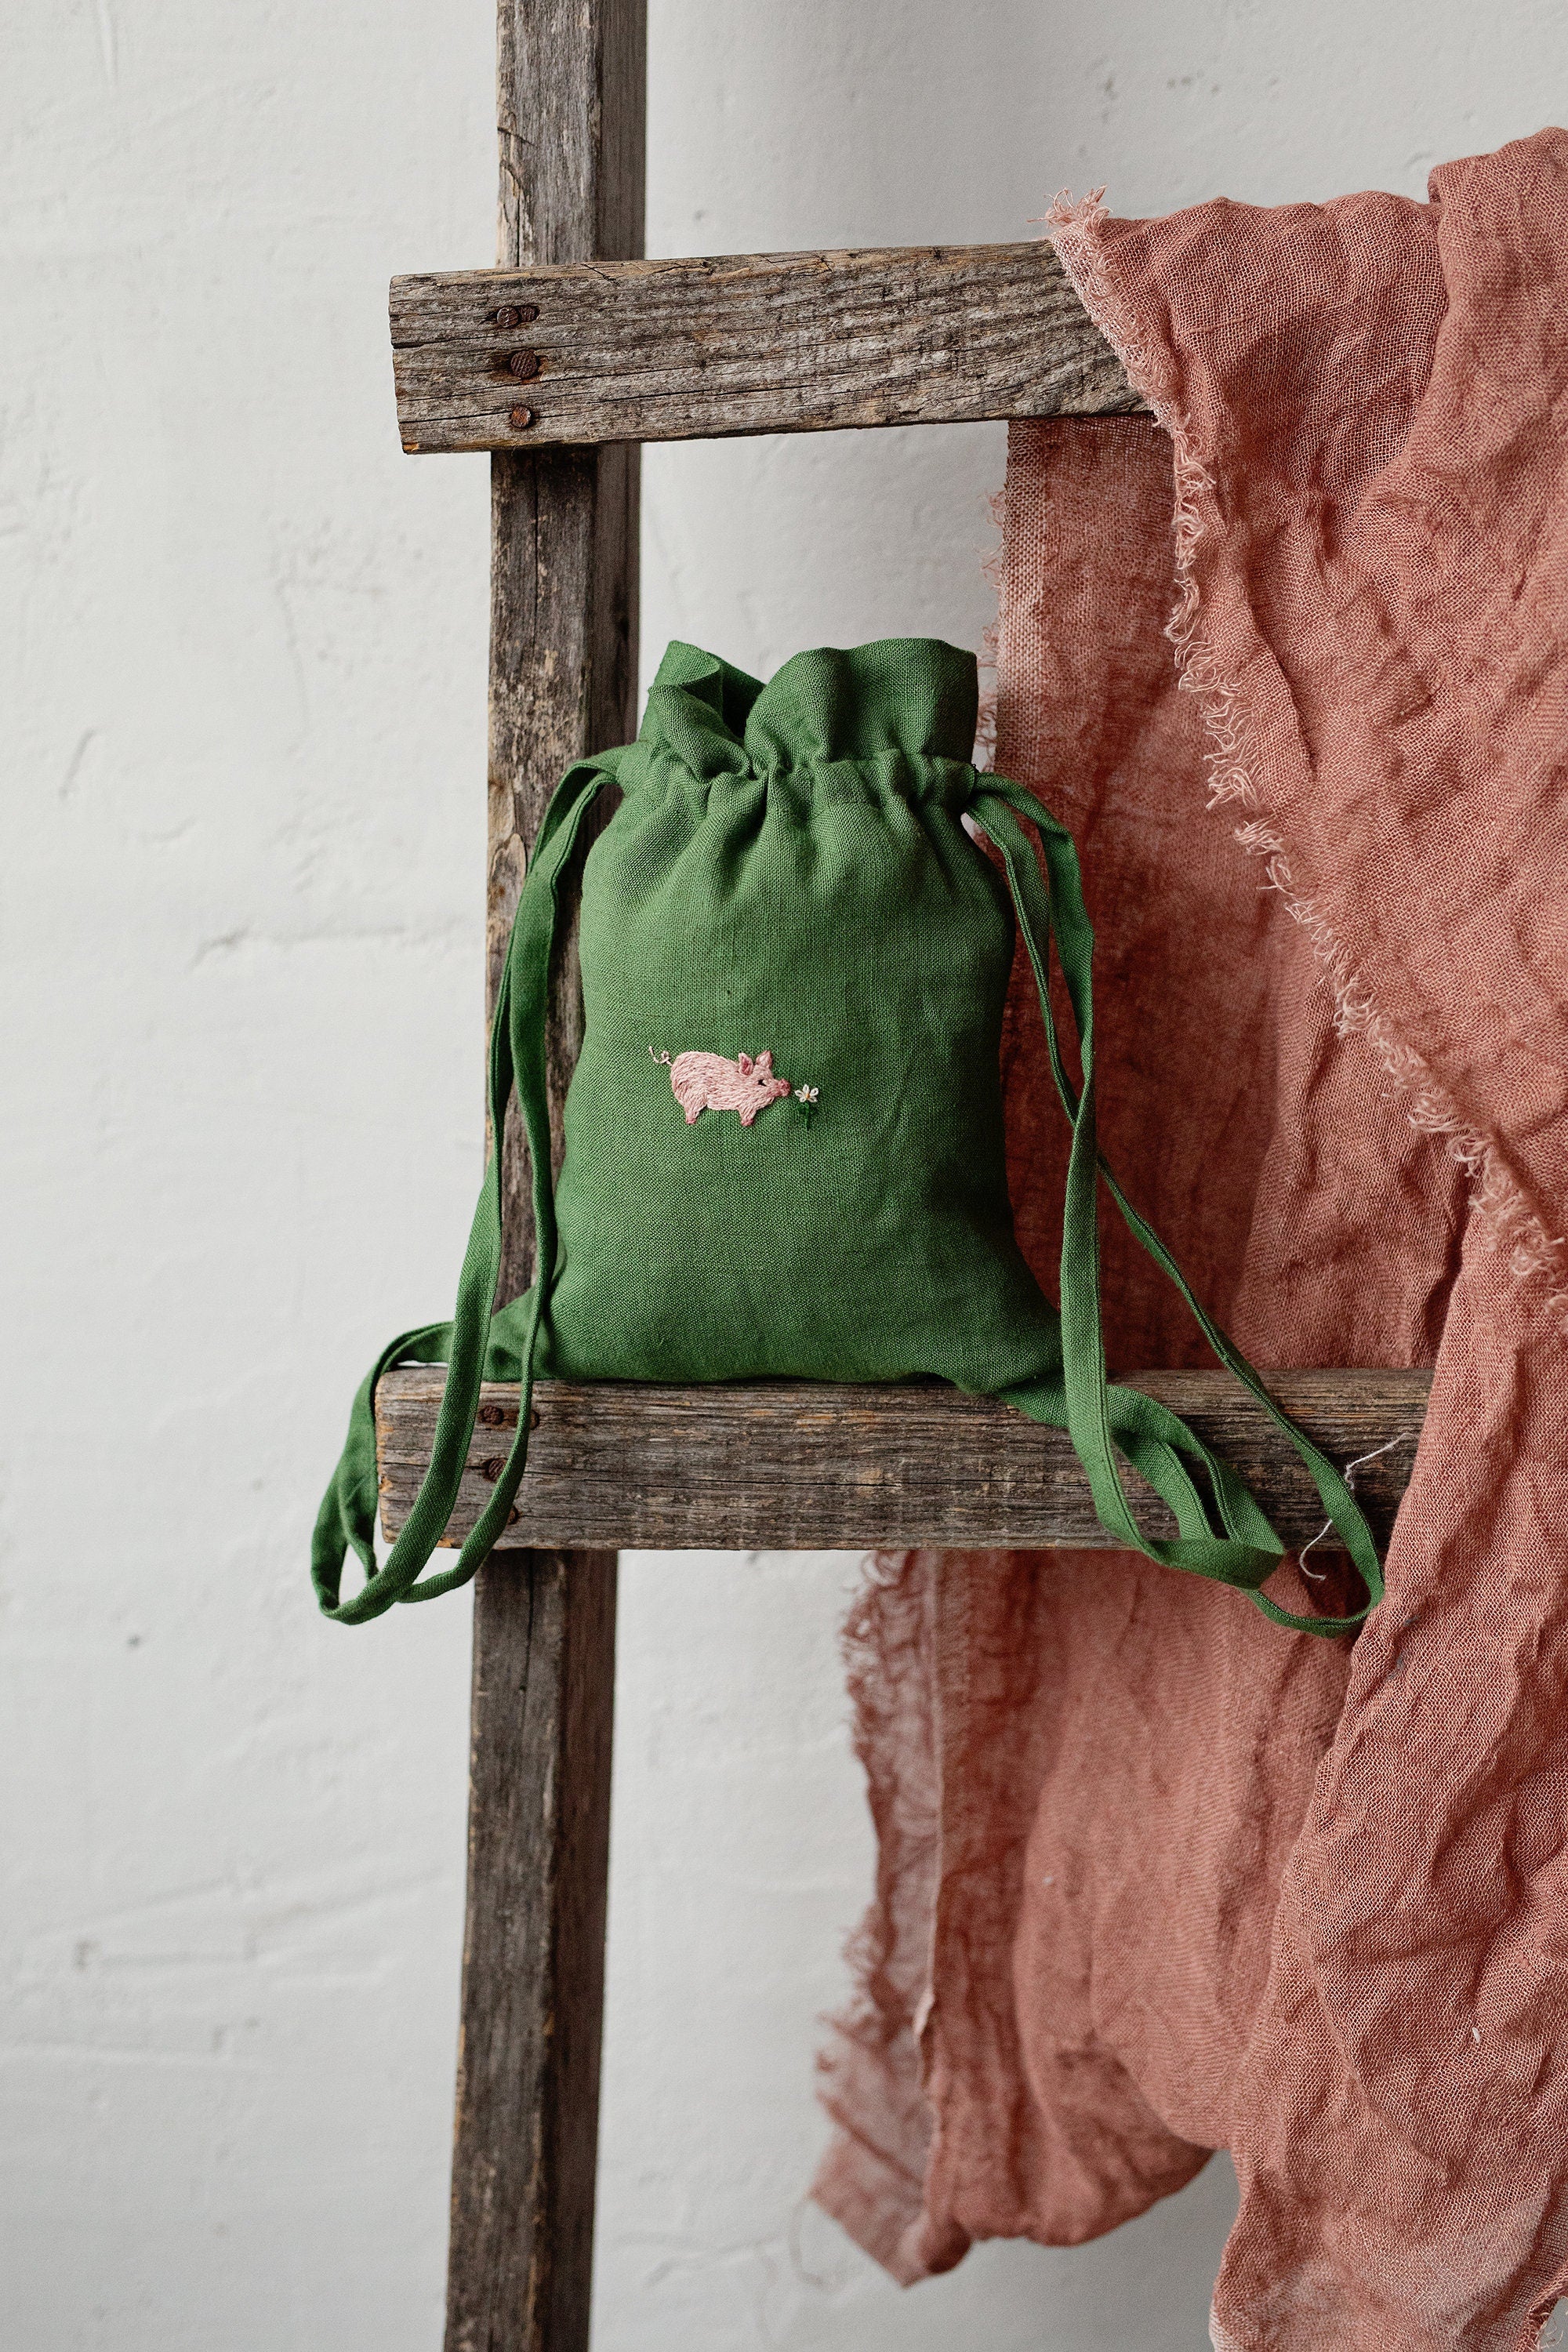 Pig and Flower Linen Backpack